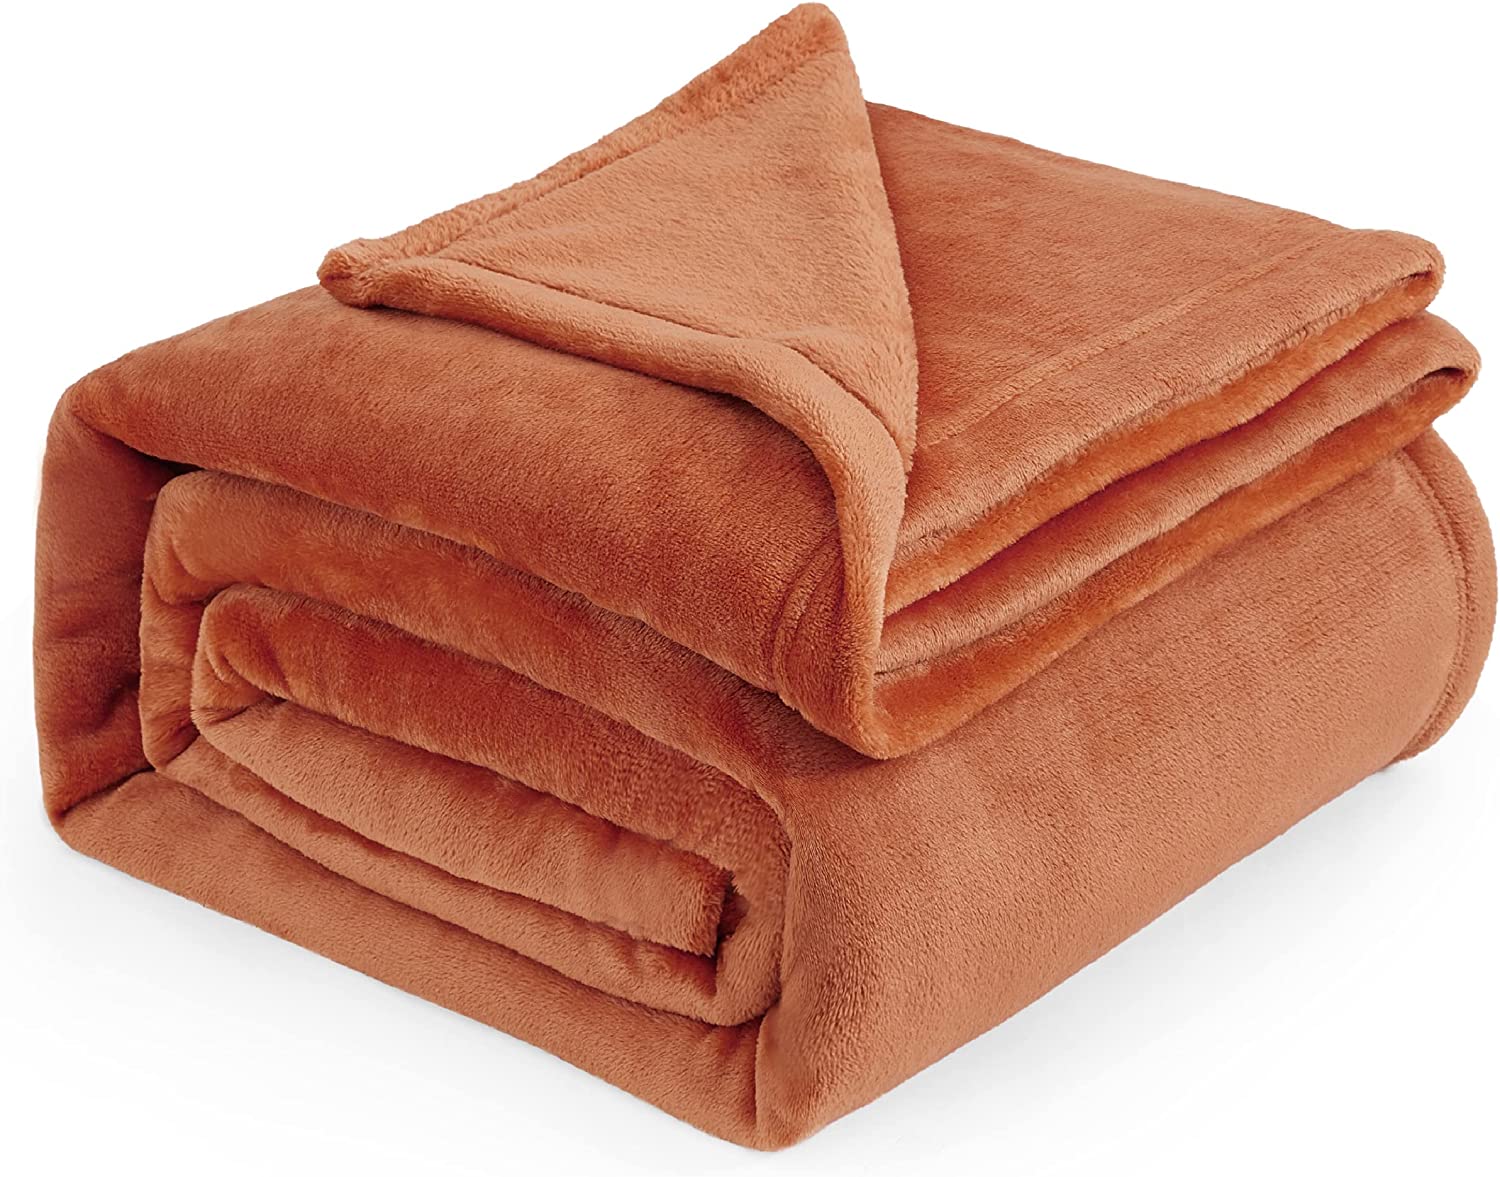 Bedsure Fleece Bed Blankets Queen Size Grey - Soft Lightweight Plush Fuzzy  Cozy Luxury Blanket Microfiber, 90x90 inches